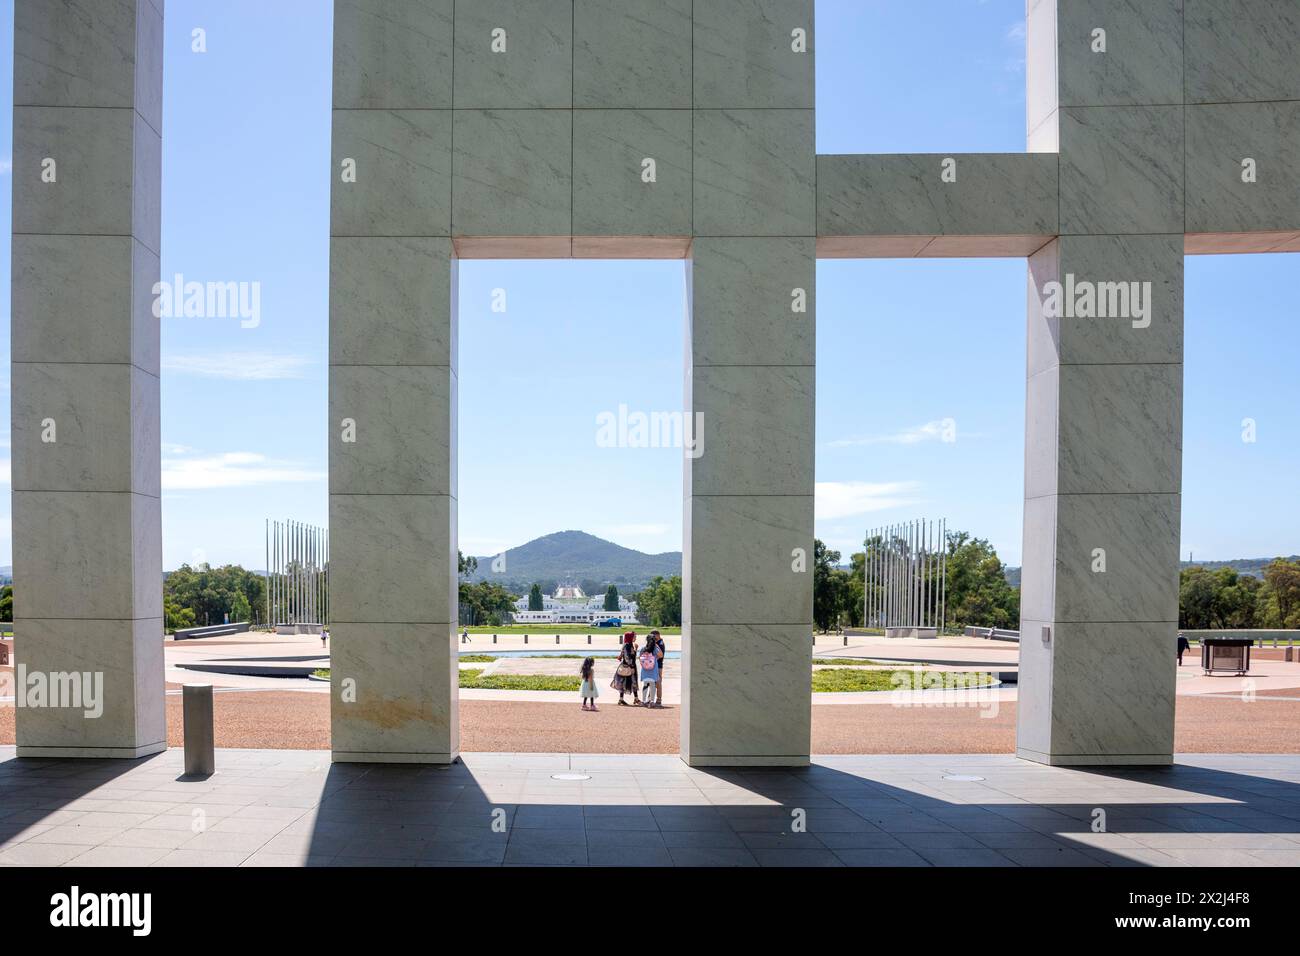 Foyer am Eingang zum Parlamentsgebäude, Capital Hill, Parliamentary Triangle, Canberra, Australian Capital Territory, Australien Stockfoto